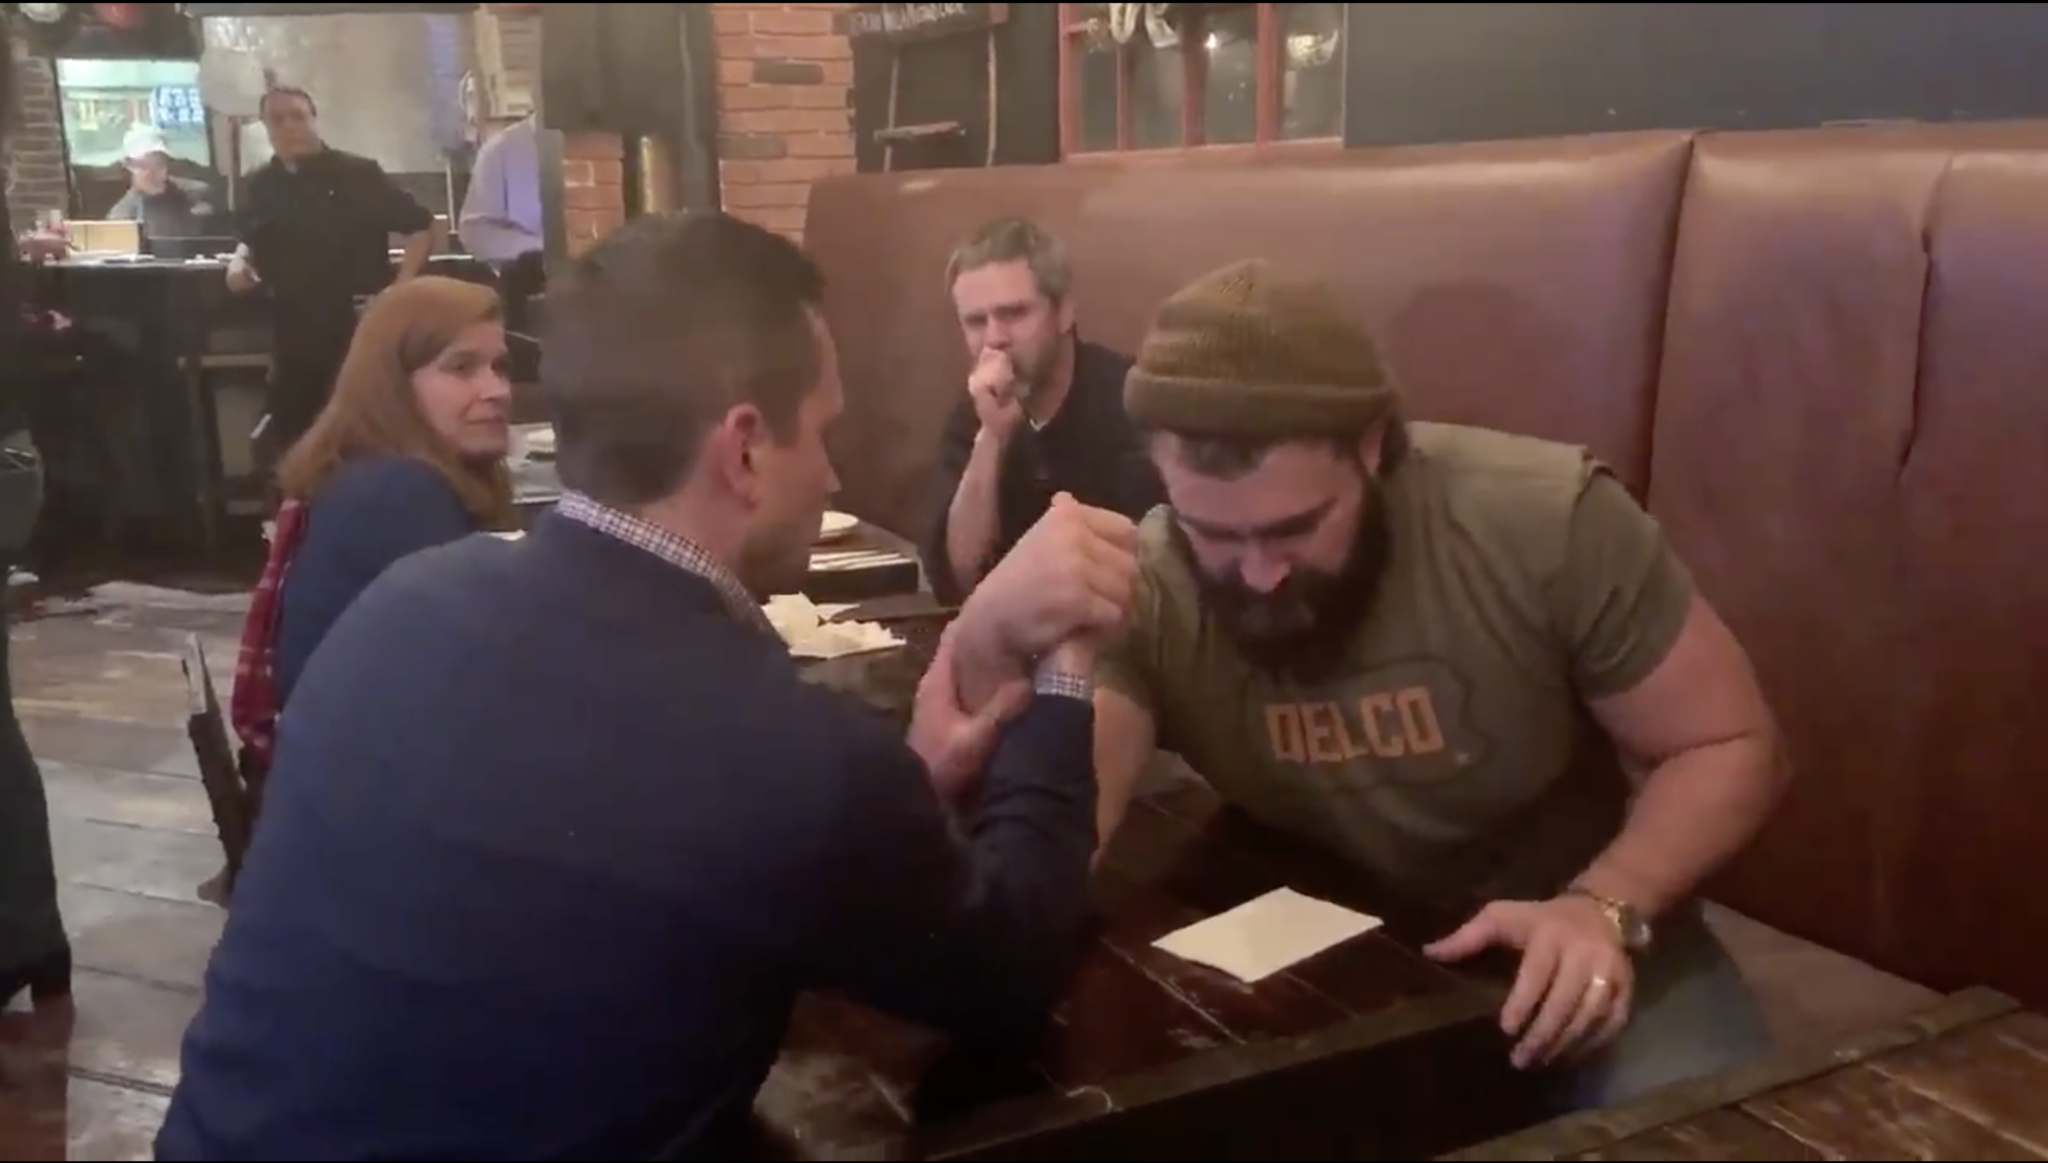 Jason Kelce Arm Wrestles Delco Man While Wearing Delco Shirt